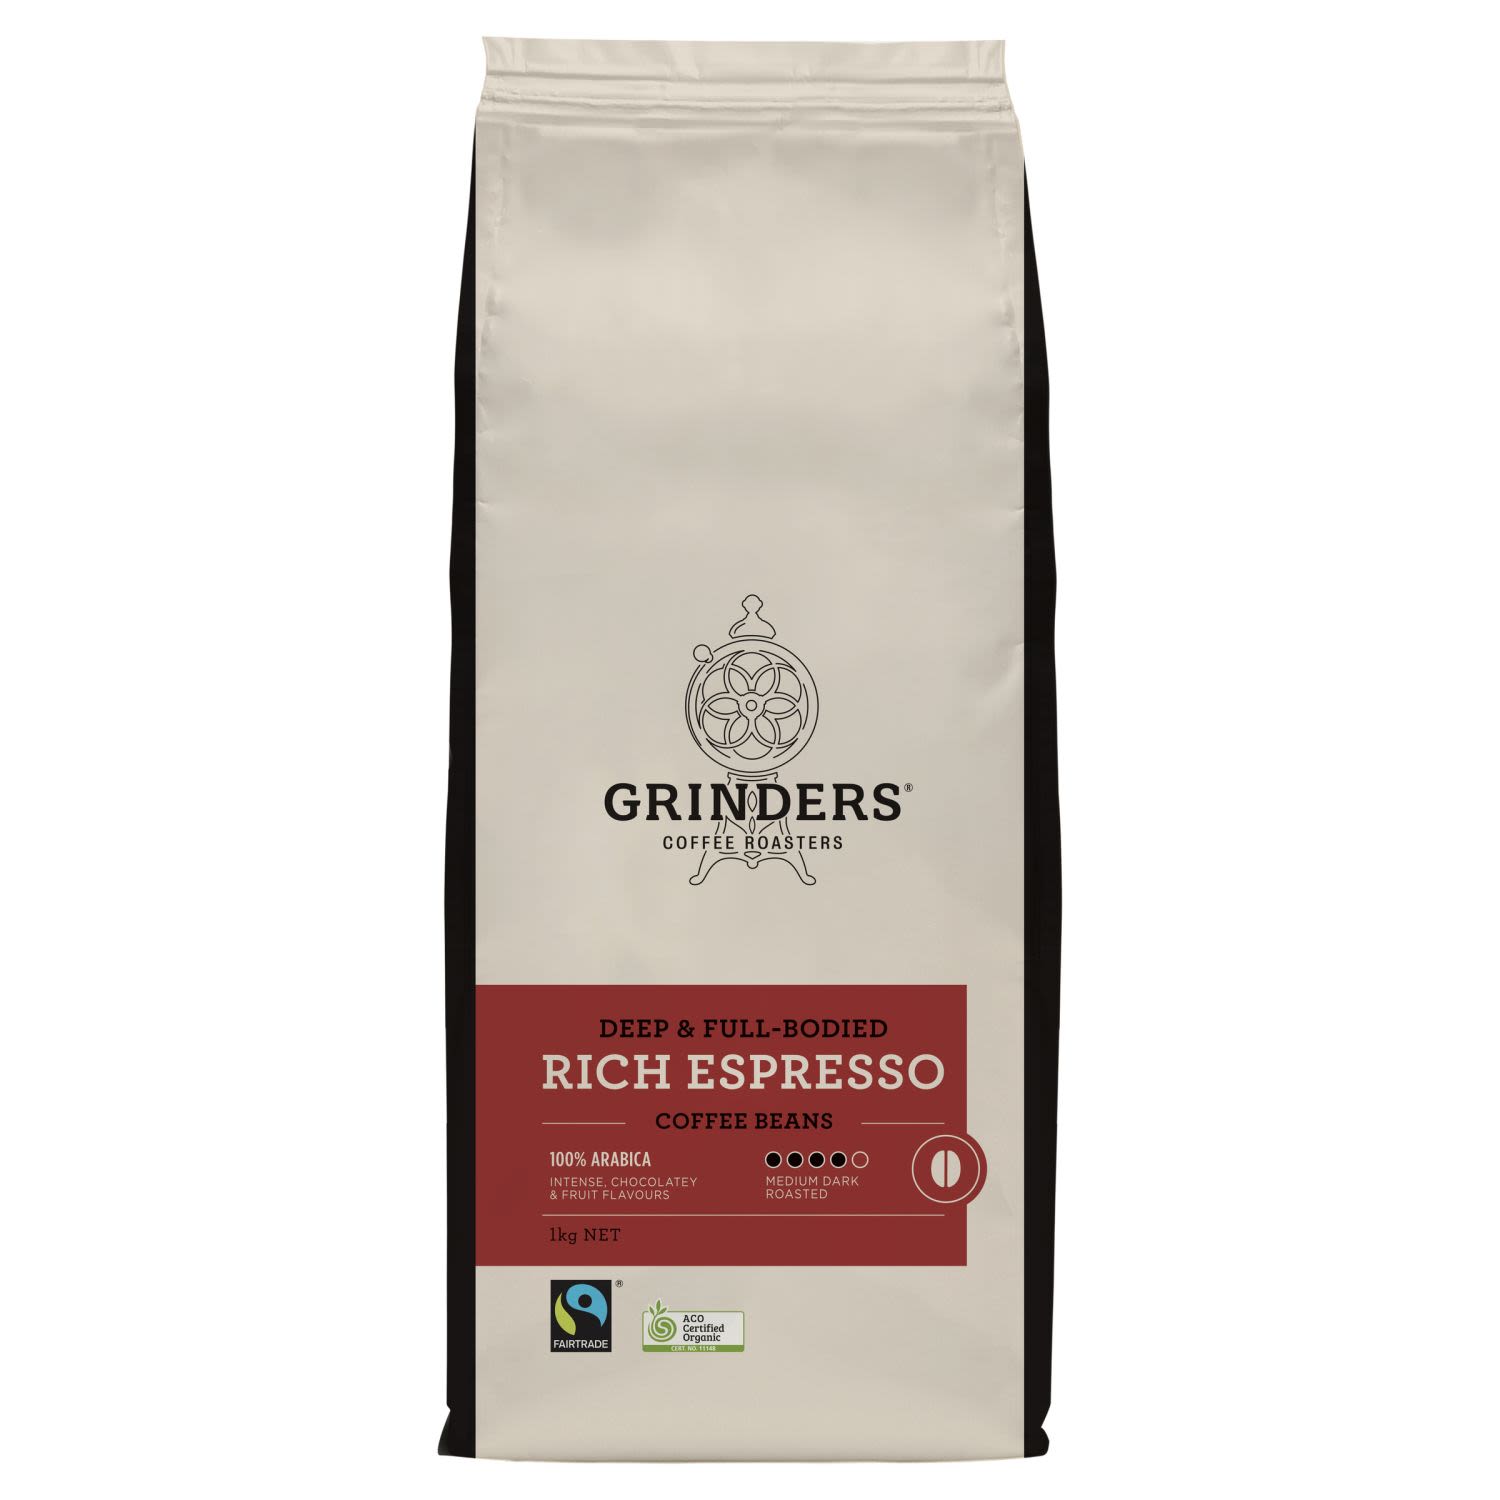 Grinders Coffee Roasters Deep & Full Bodied Rich Espresso Coffee Beans, 1 Kilogram